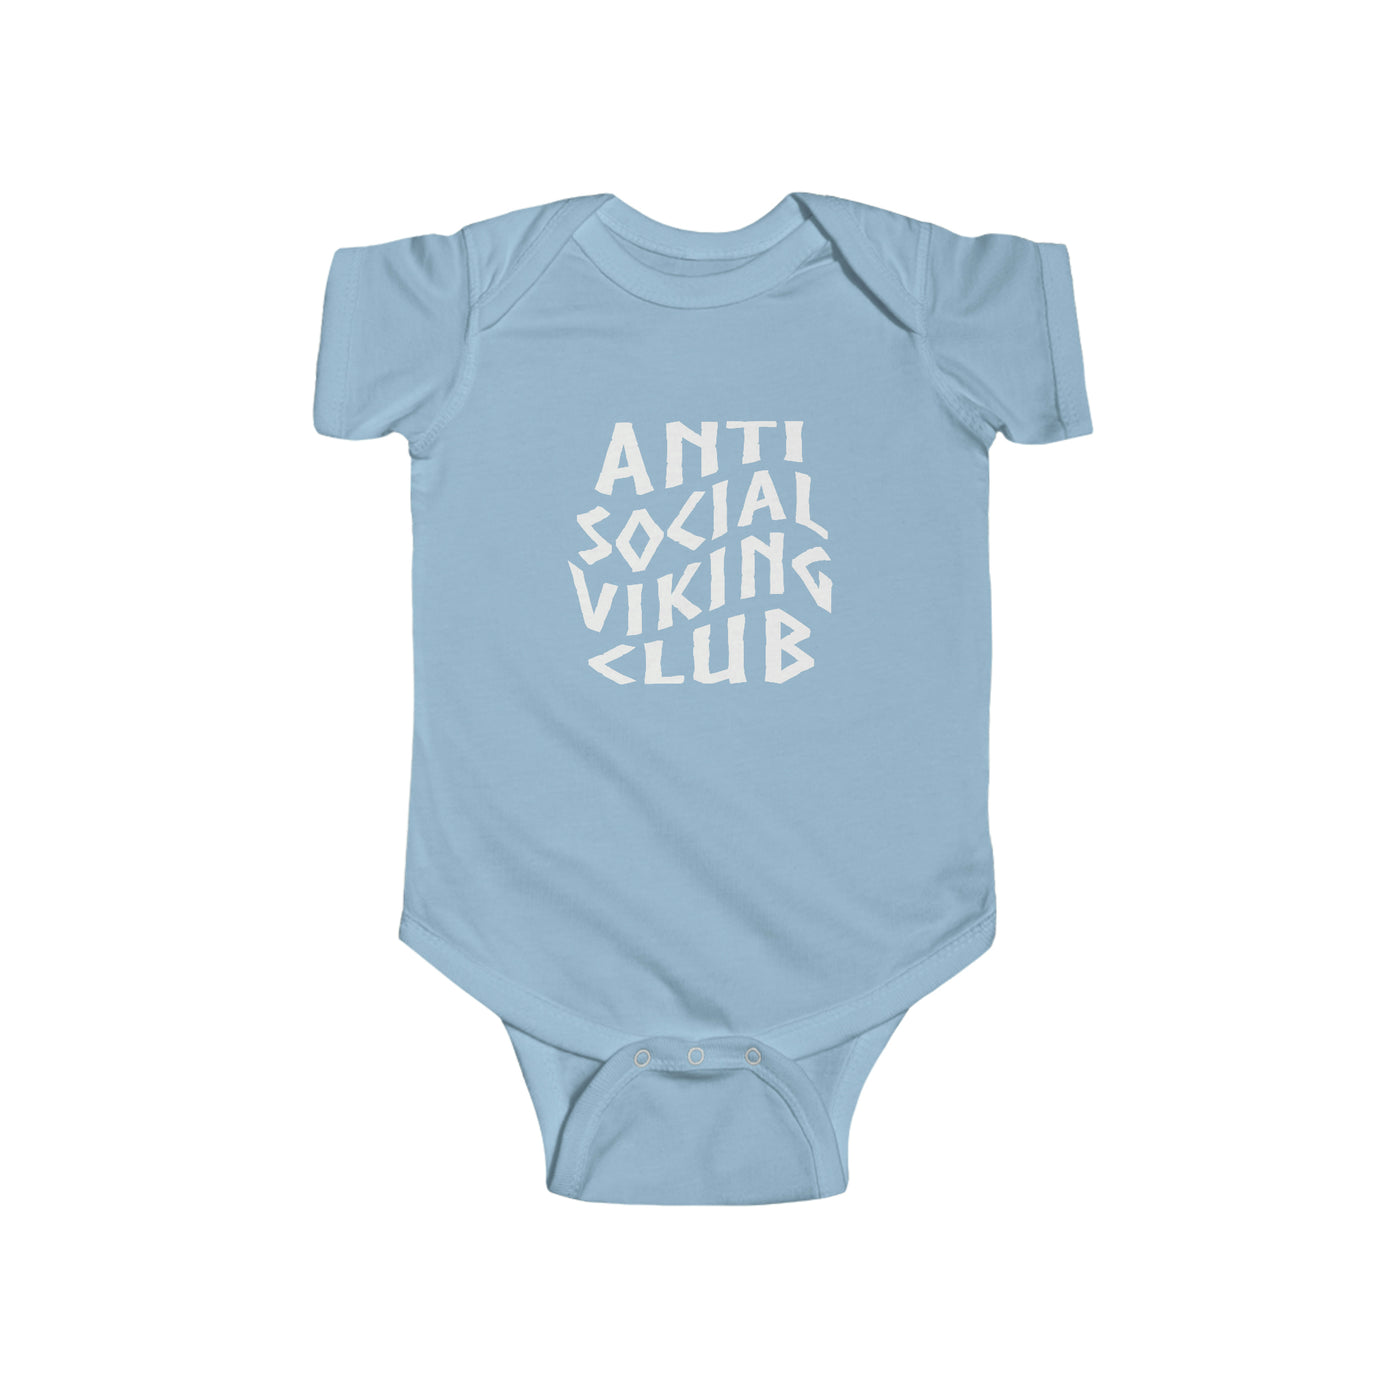 Anti Social Viking Club Baby Bodysuit